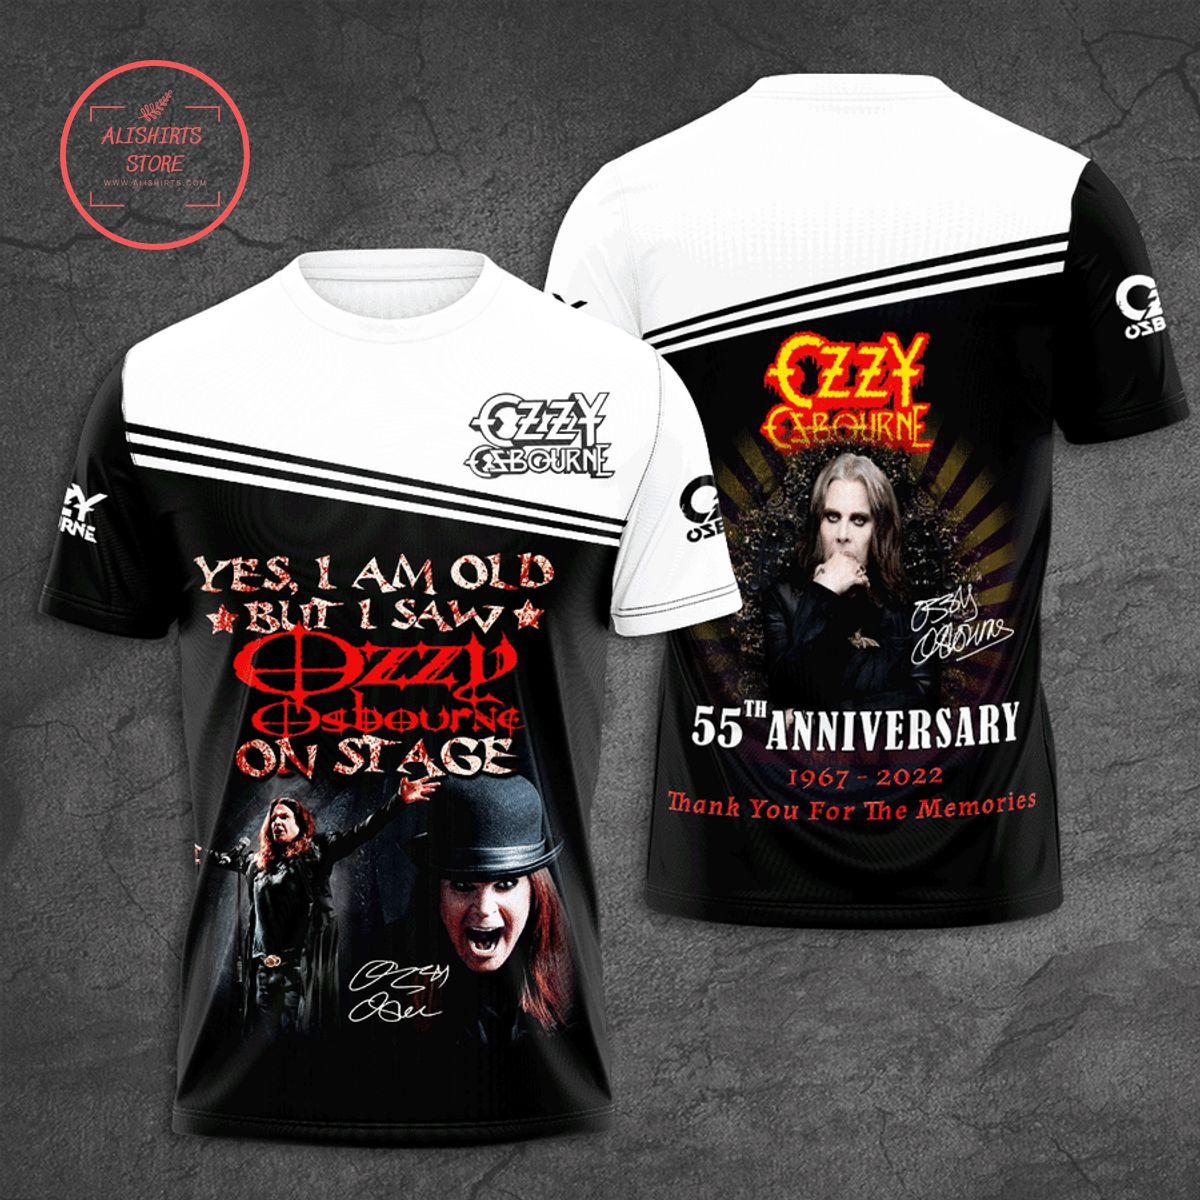 Ozzy Osbourne 56th anniversary 1967 2022 Shirts